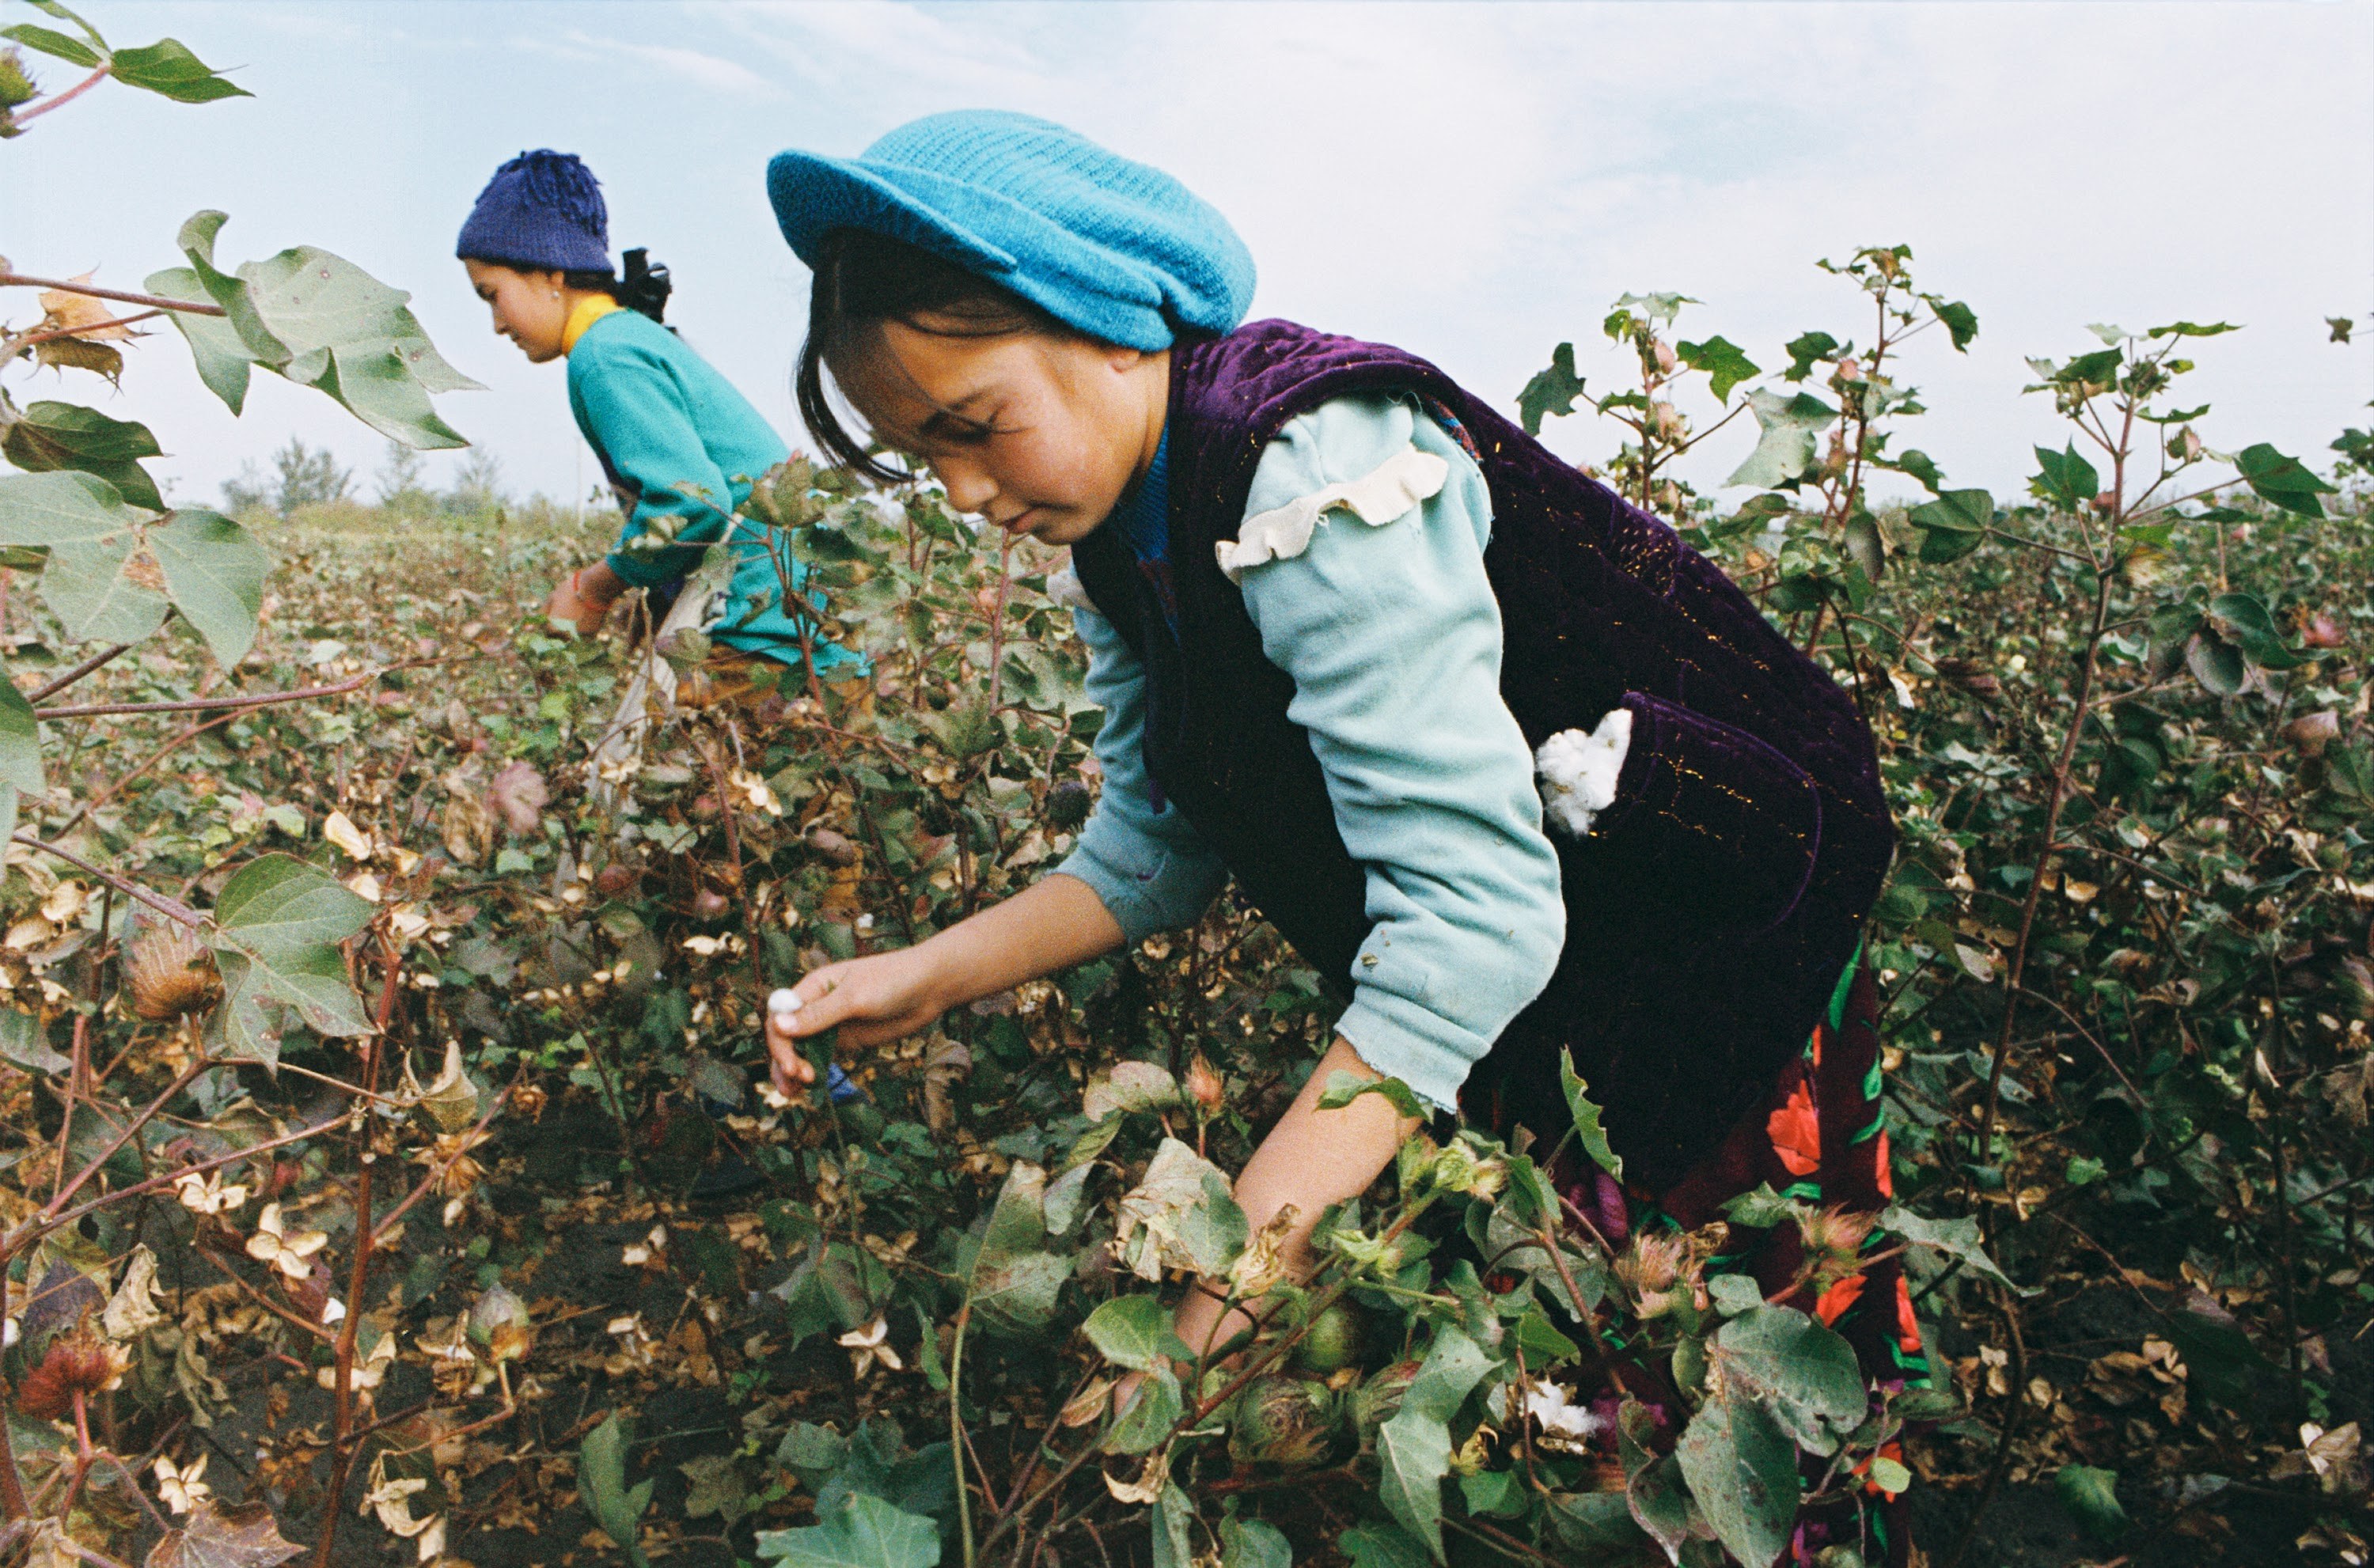 Girl Picking Cotton in Uzbekistan 2004